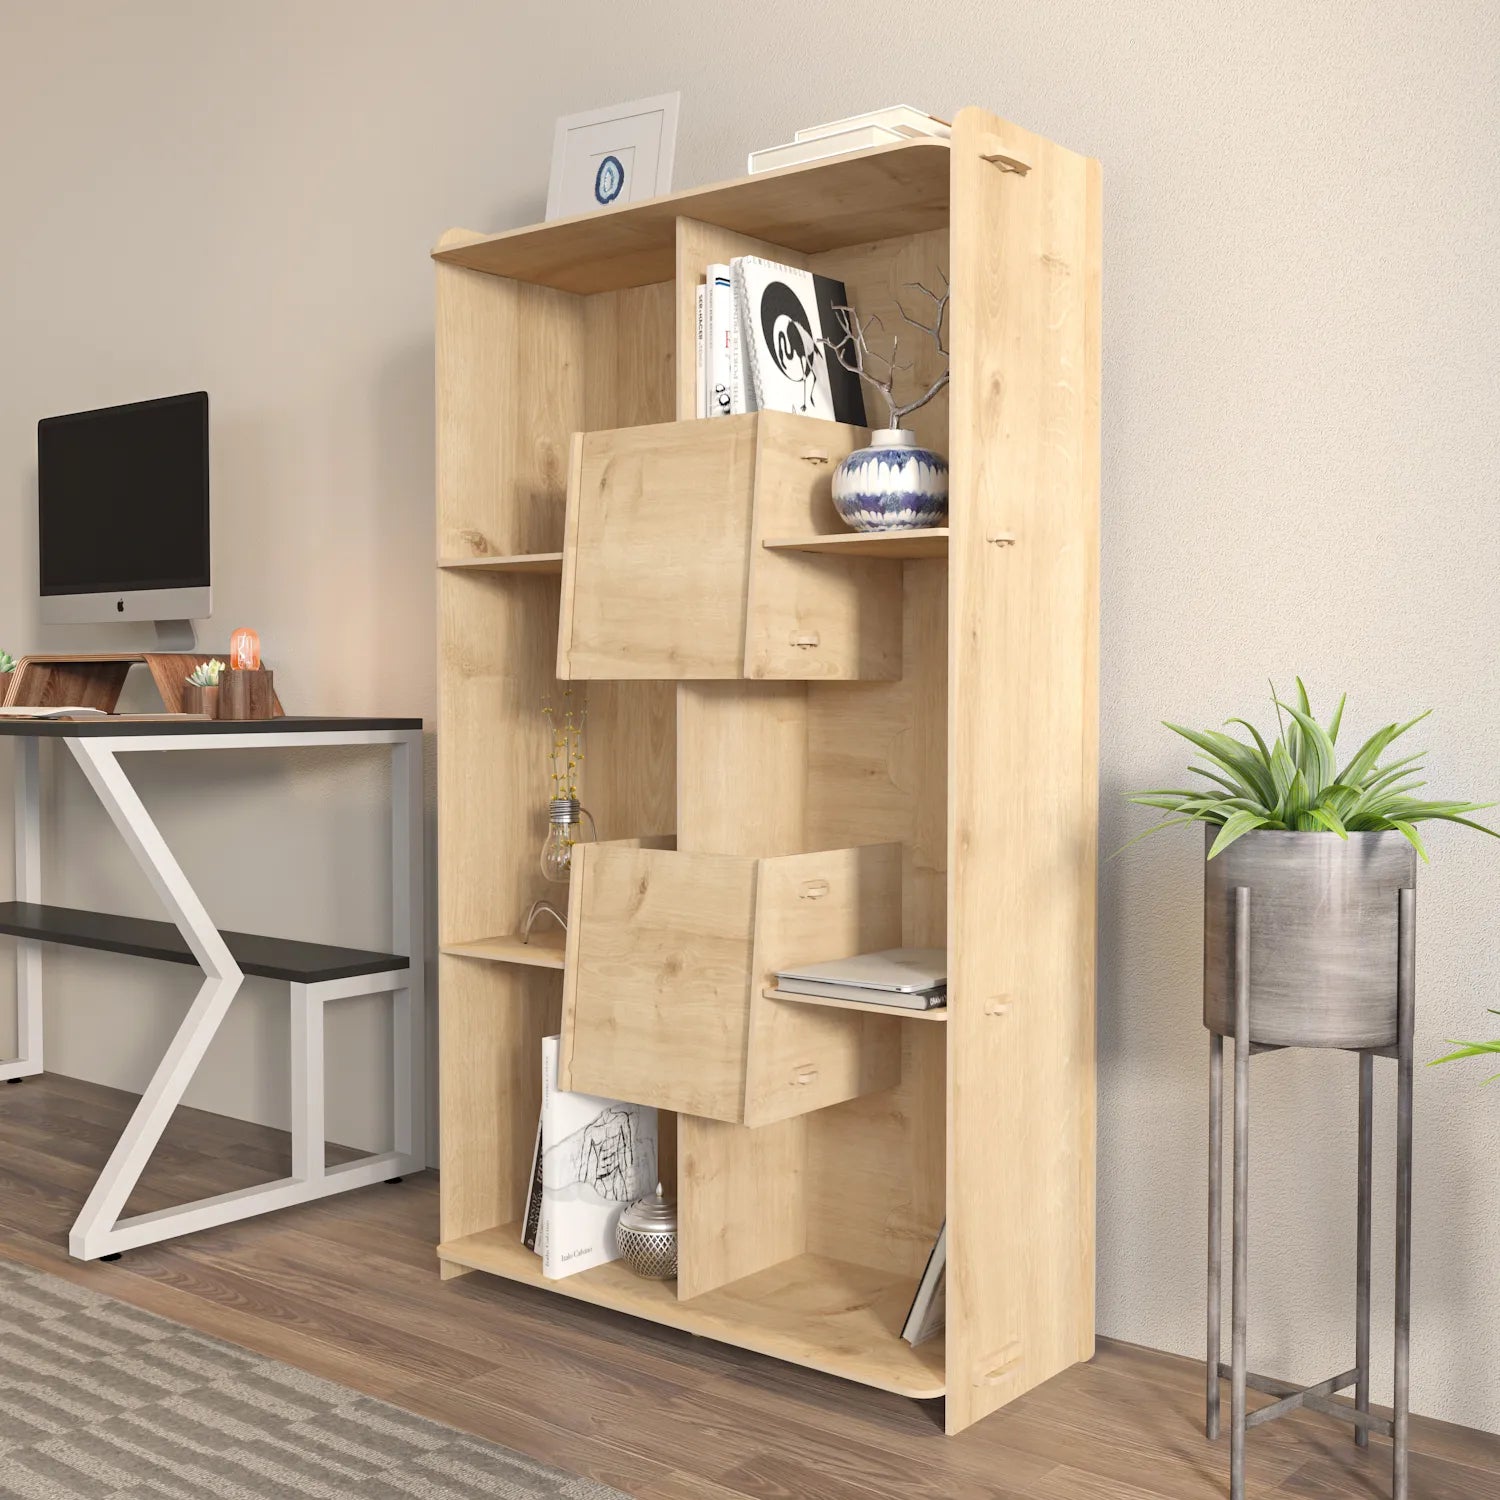 Pana 54" Tall MDF Bookcase | Bookshelf | Screwless Design